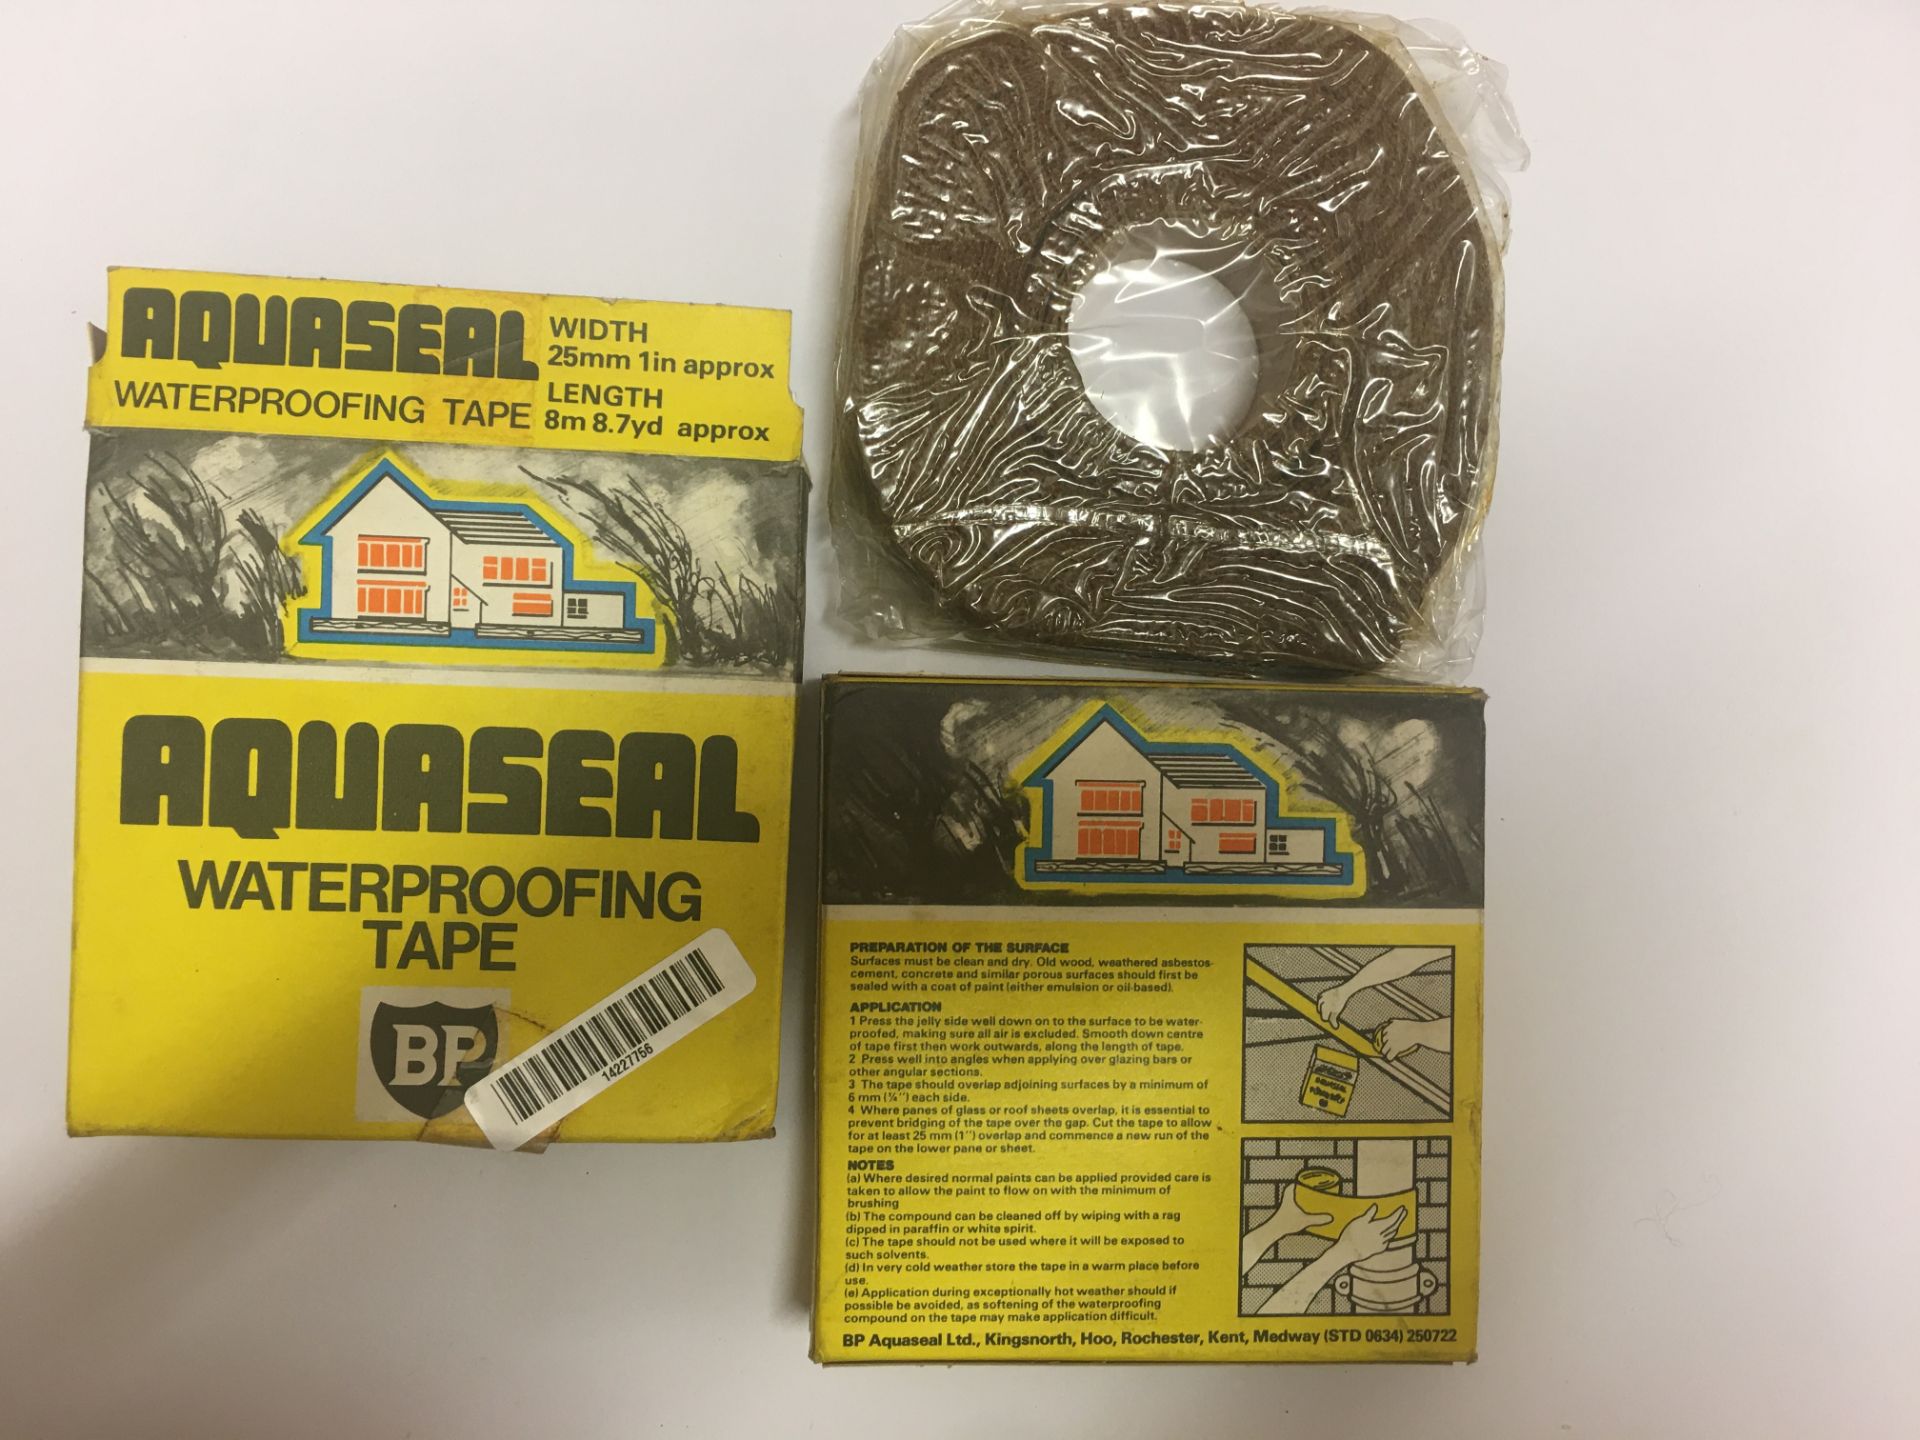 AQUASEAL WATERPROOF TAPE (PACK OF 10 BOXED TAPES)